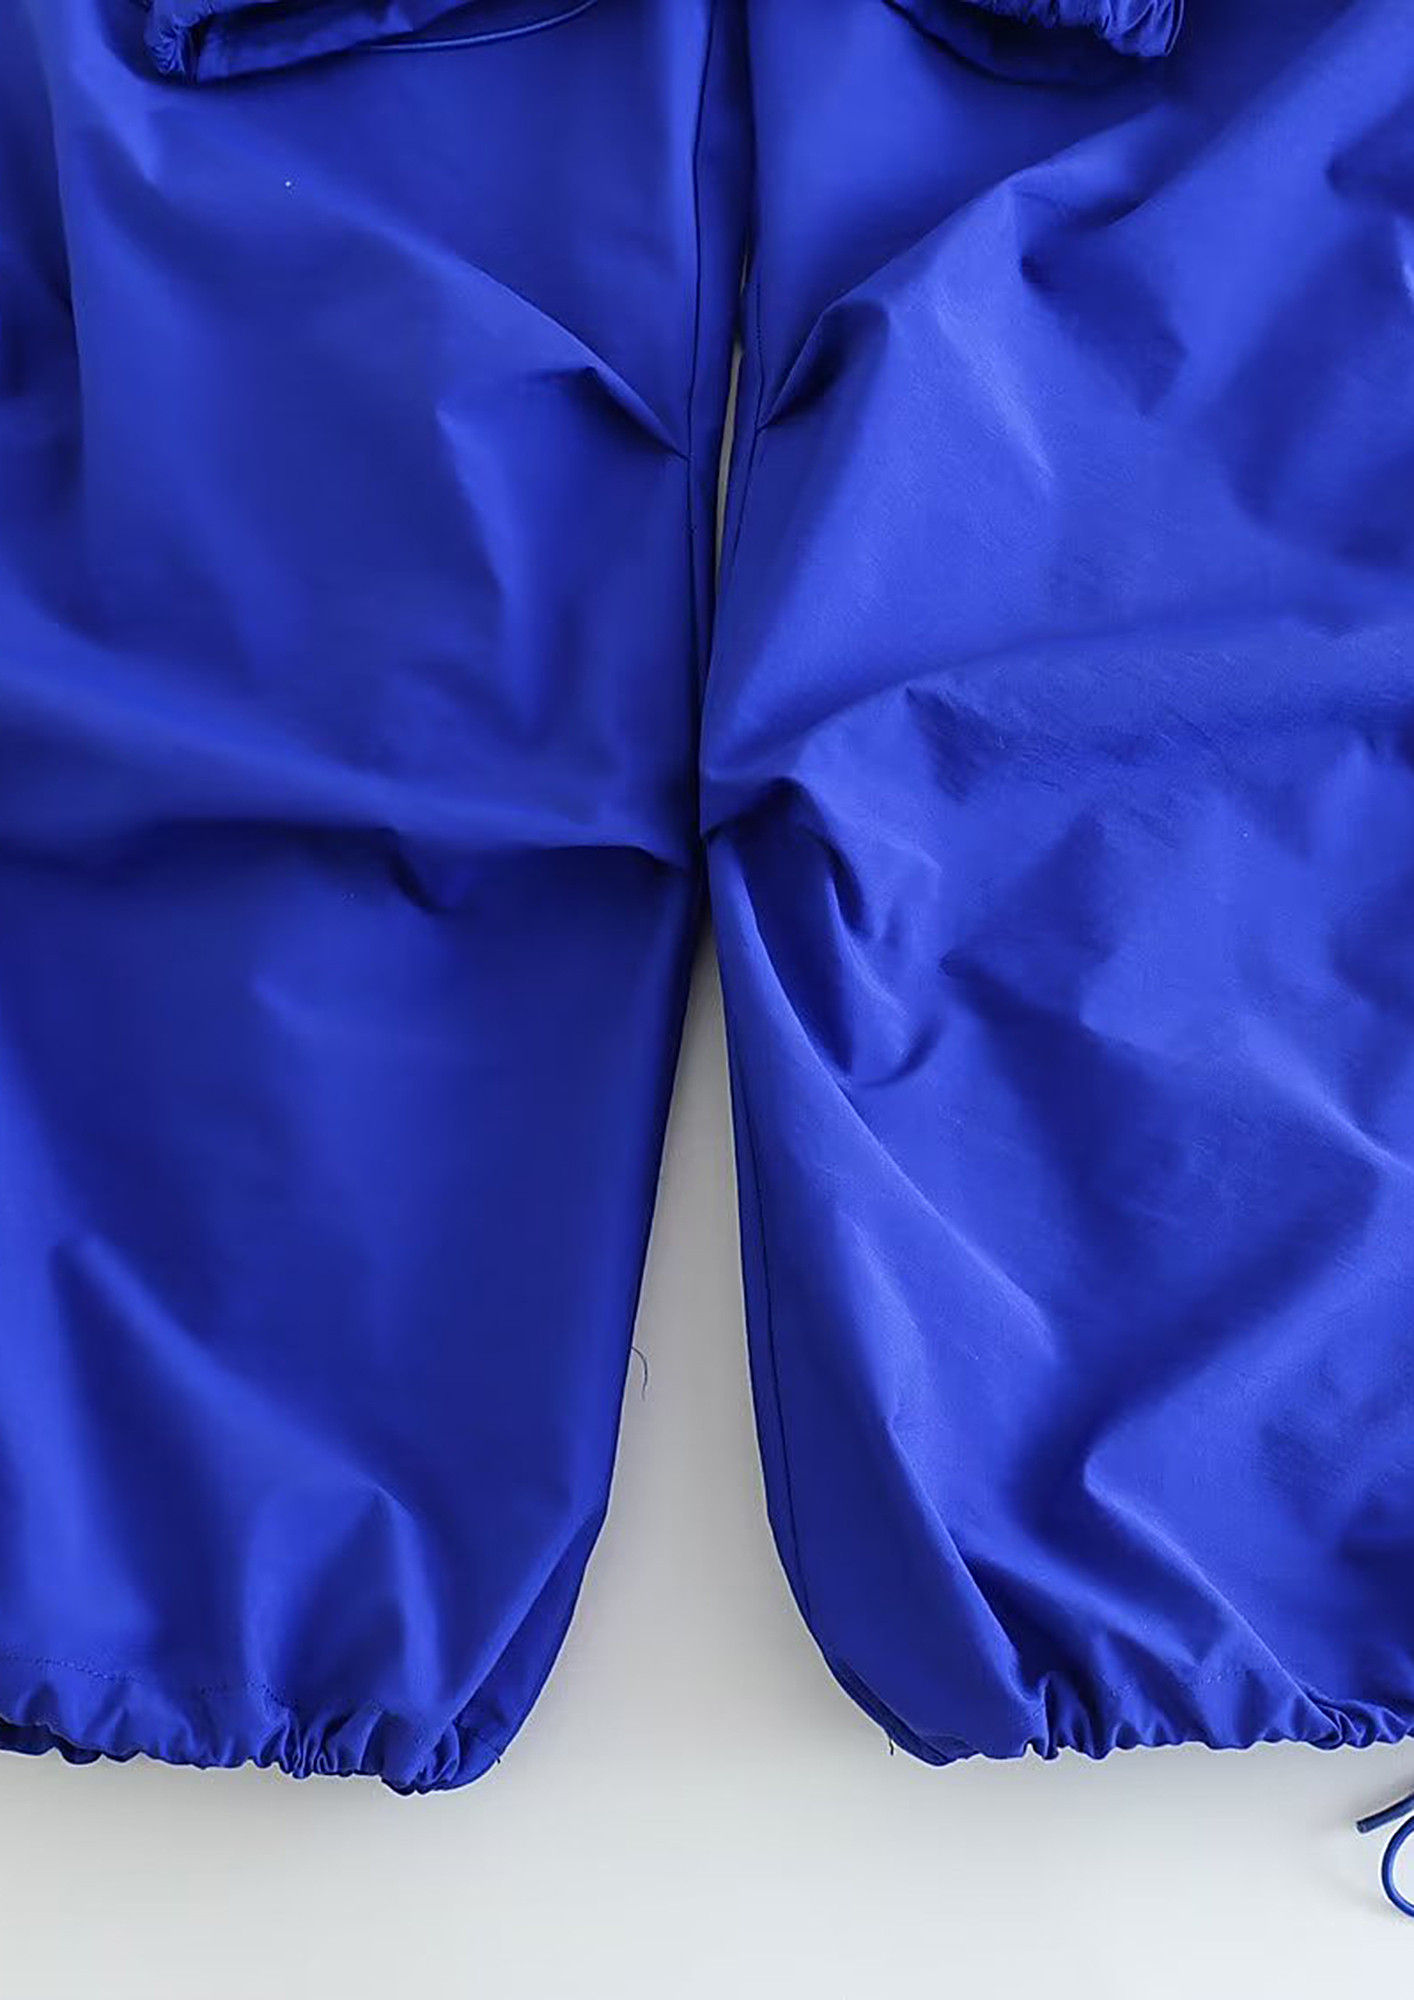 ASOS DESIGN oversized parachute pants in iridescent blue  part of a set   ASOS